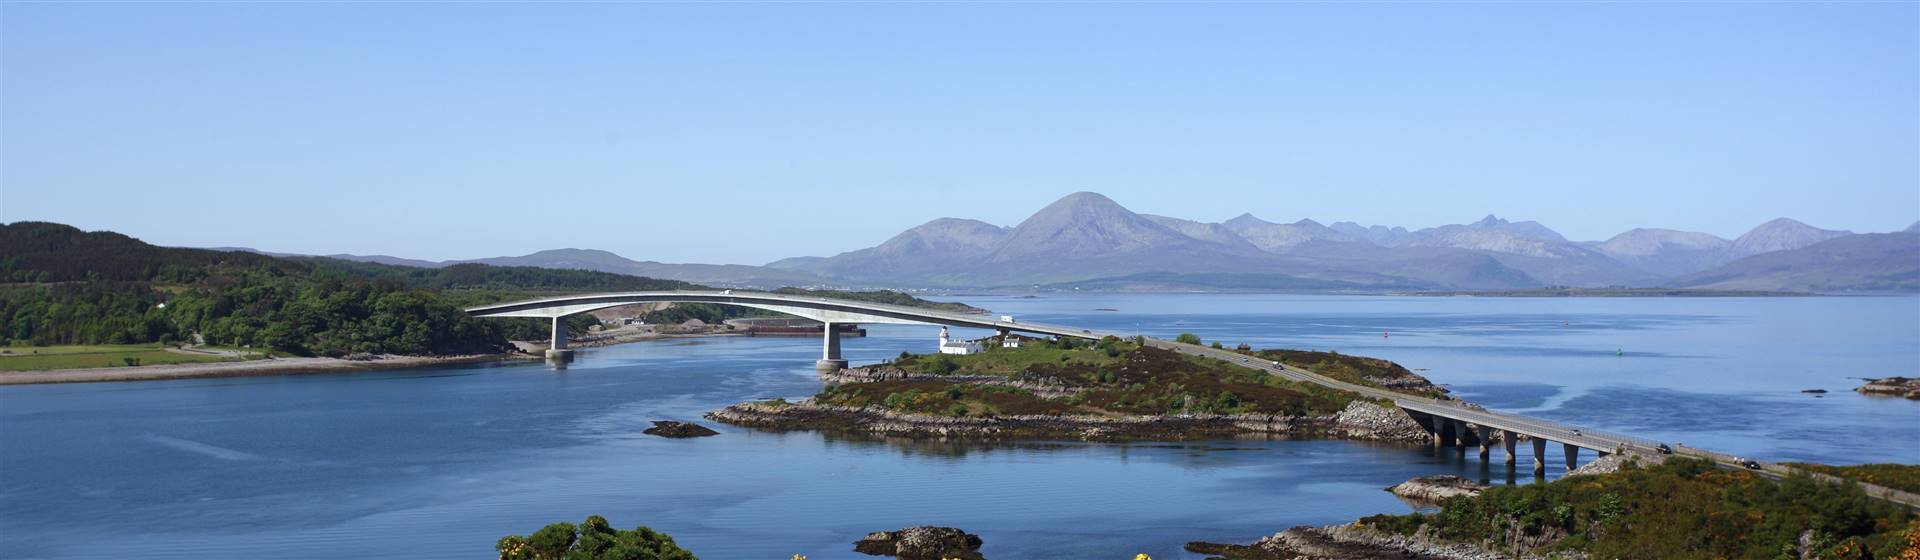 Skye & The Bridge - VisitScotland Paul Tomkins